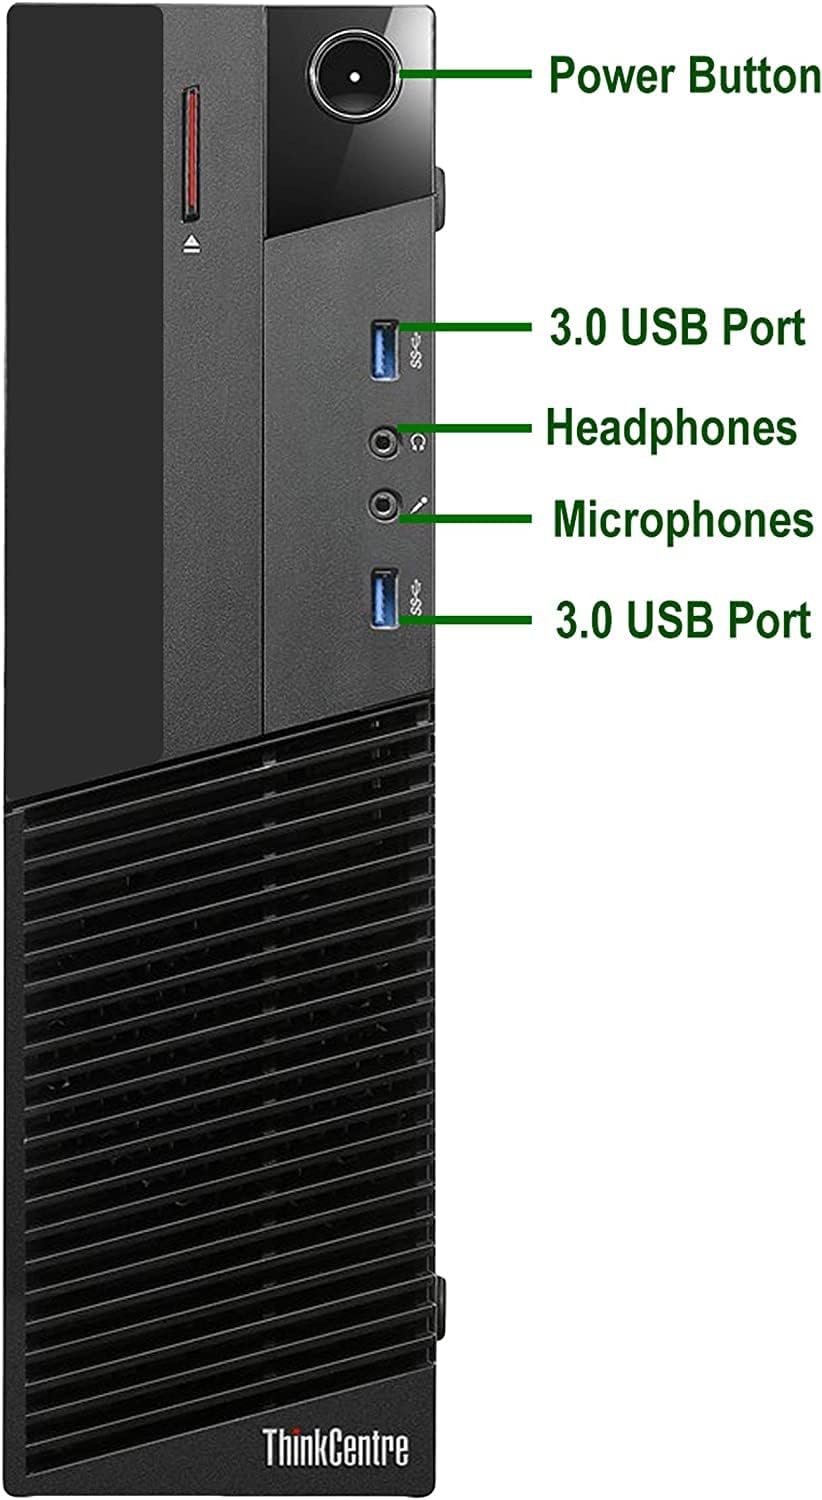 Lenovo SFF Computer Desktop PC, Intel Core i7 3.4GHz Processor, 16GB Ram, 128GB SSD, 2TB HDD, Wireless Keyboard & Mouse, WiFi | Bluetooth, New 24